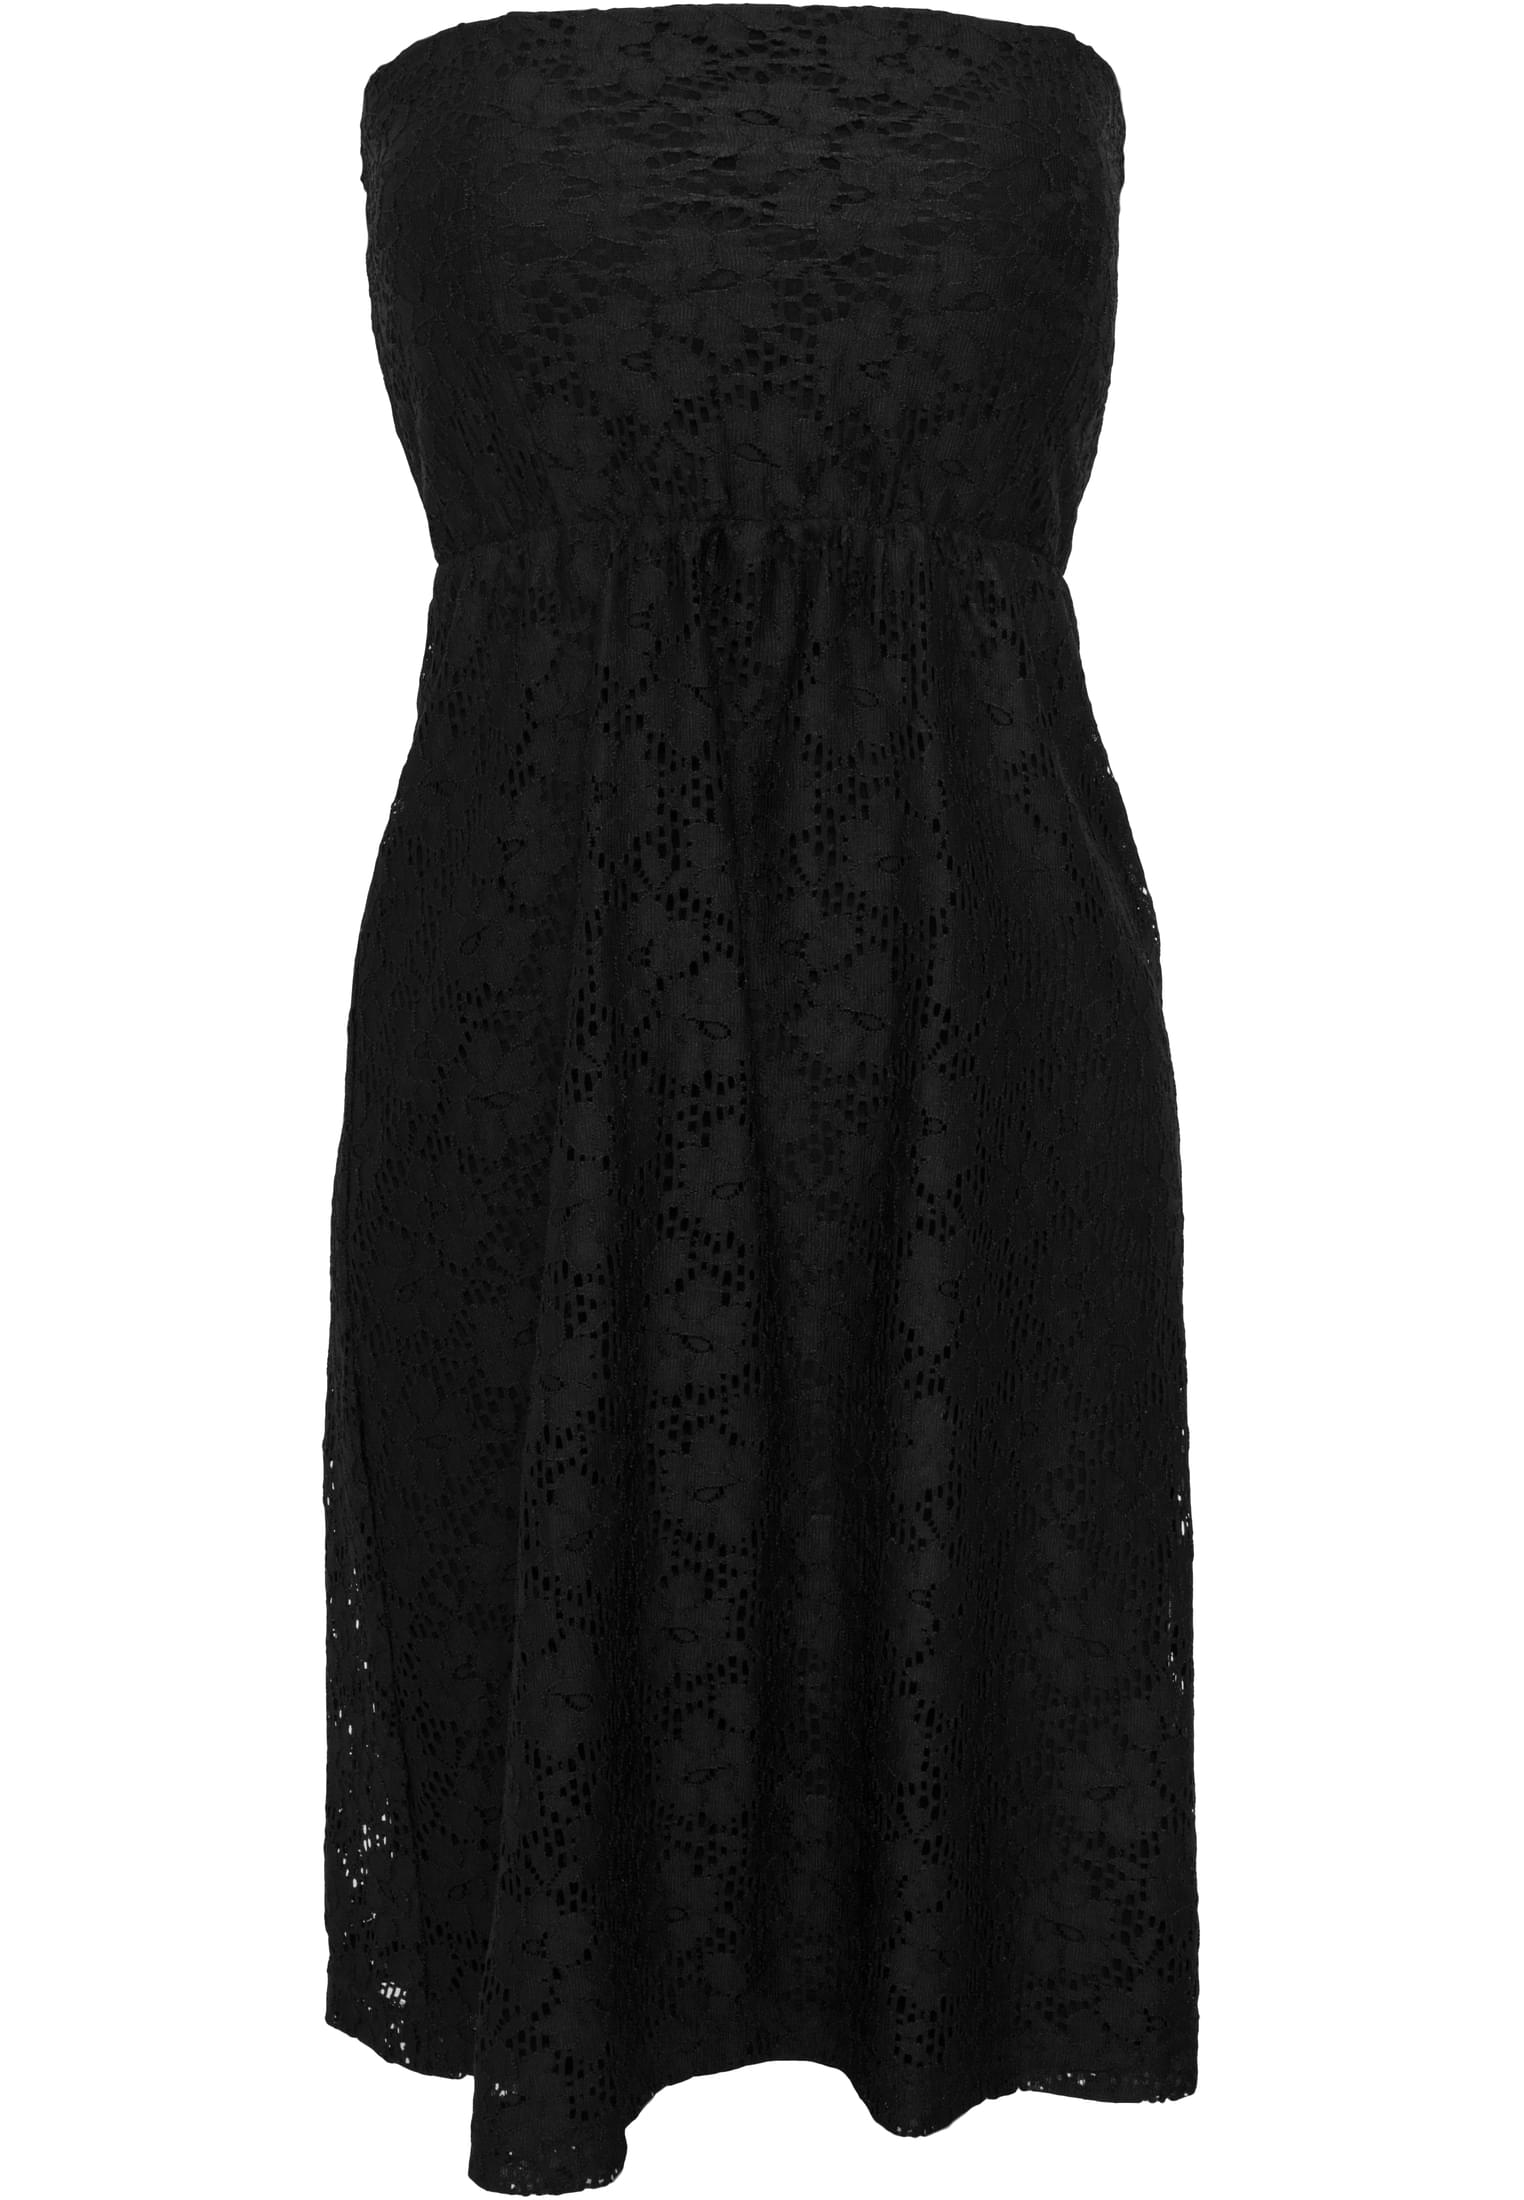 Women's Lace Dress Black